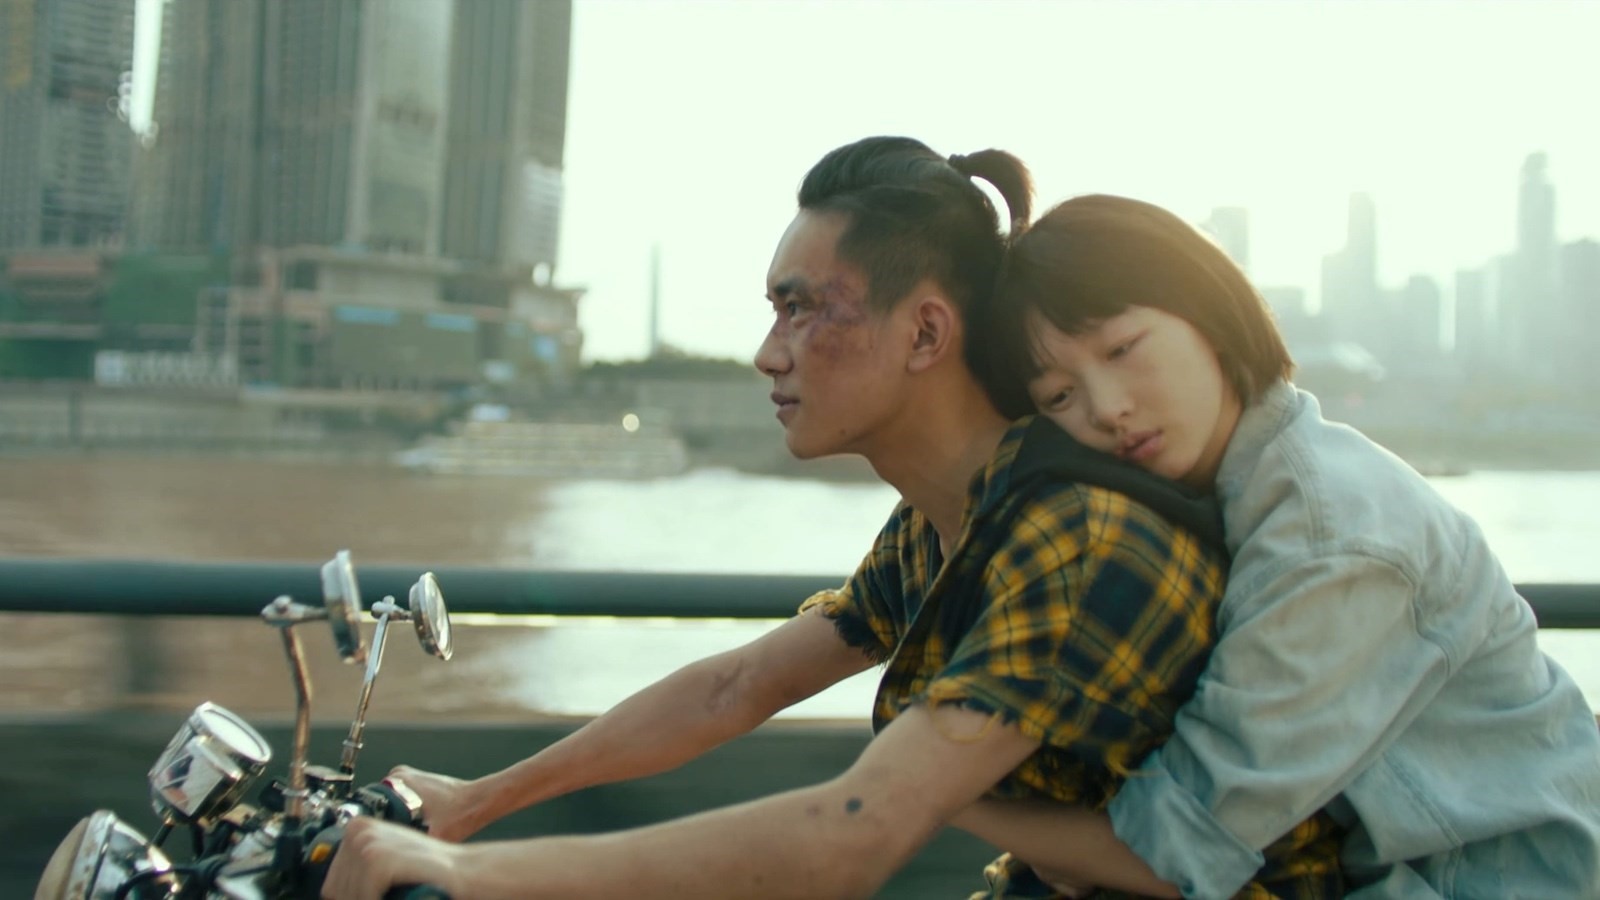 Oscars 2021: Derek Tsang on Better Days, His Historic Nominated Film